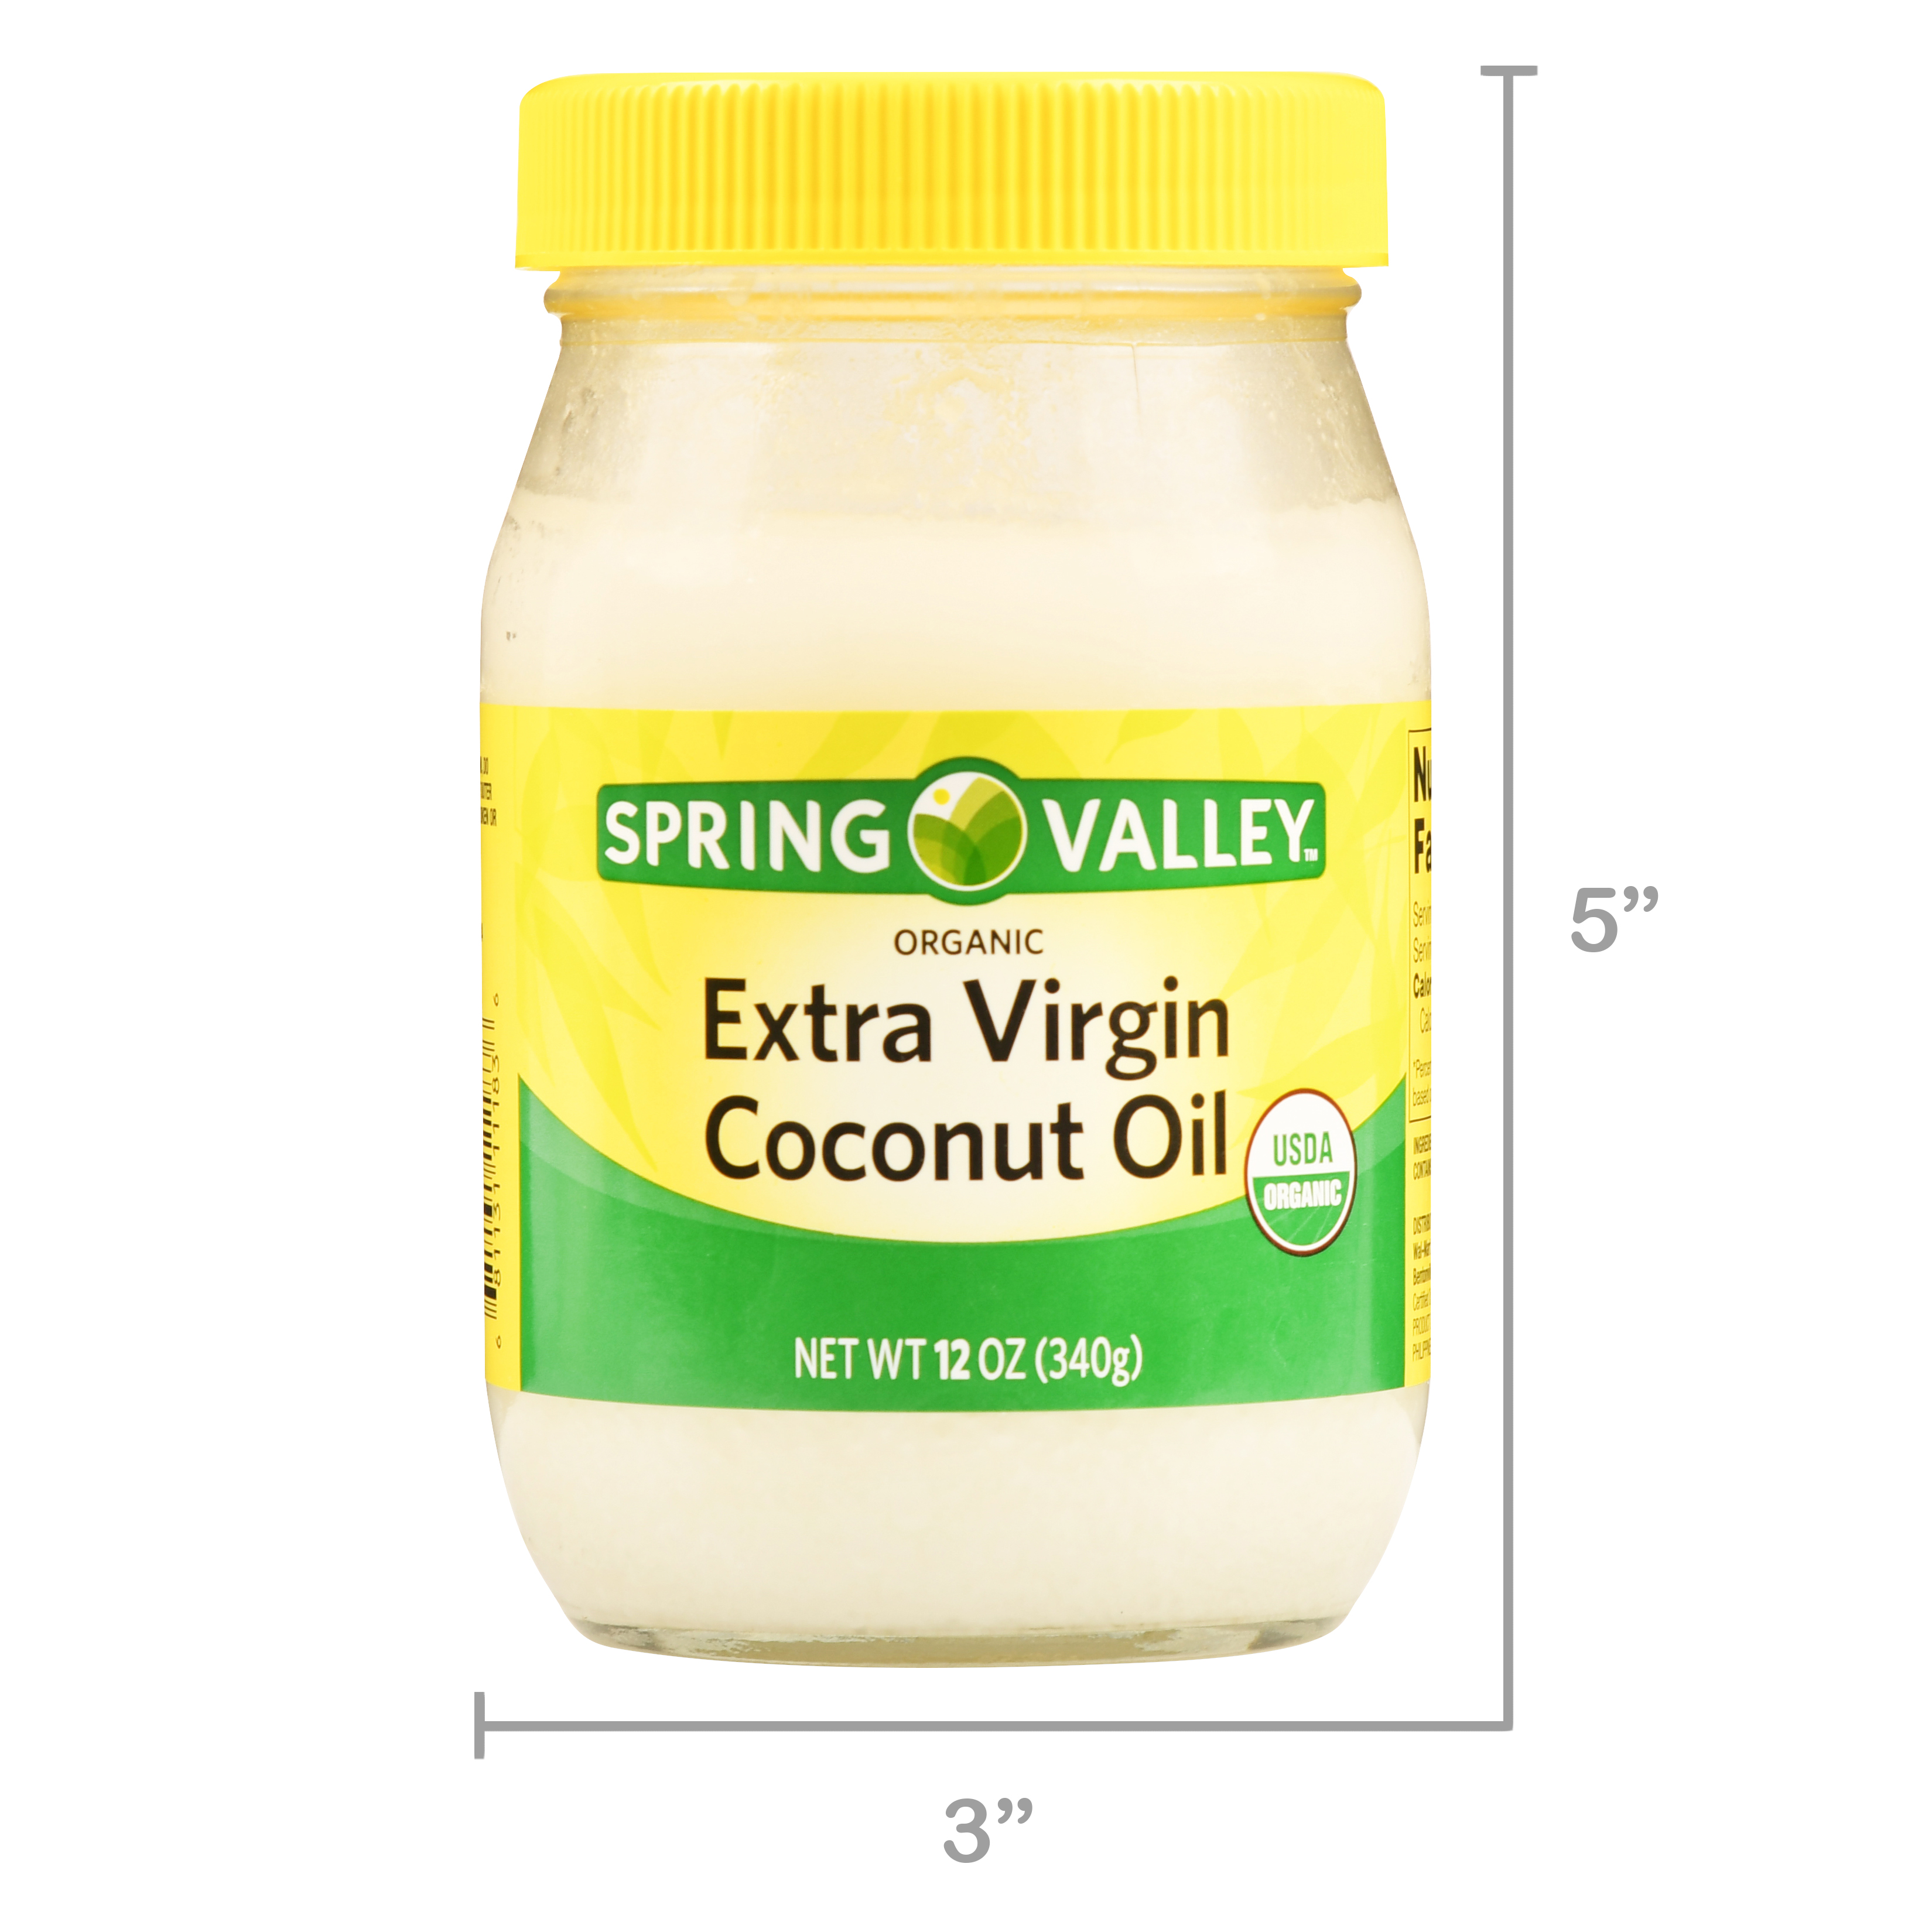 Spring Valley Organic Extra Virgin Coconut Oil, 12.0 Oz - image 4 of 6